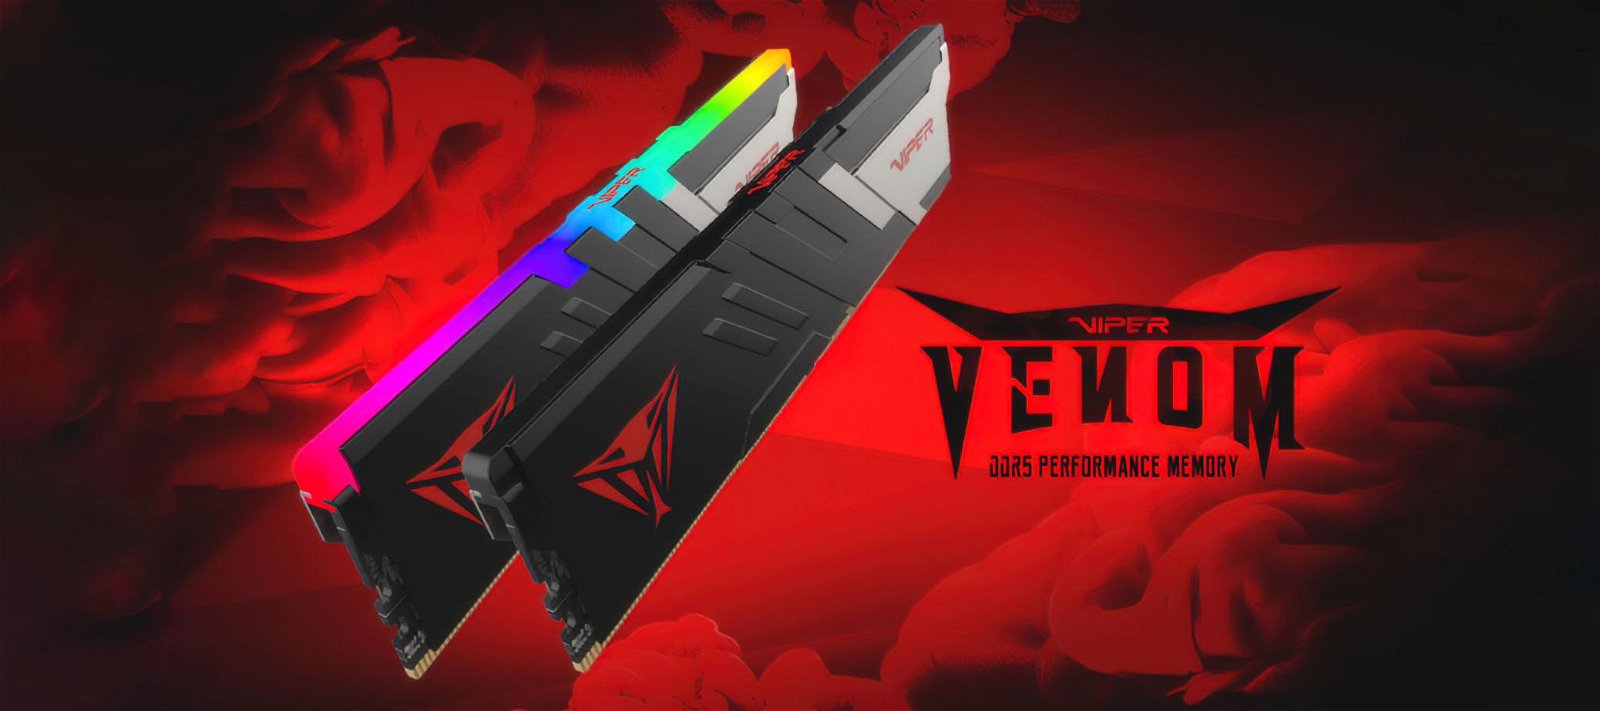 Viper™ Gaming Announces The Viper Venom Ddr5 Performance Memory Kits